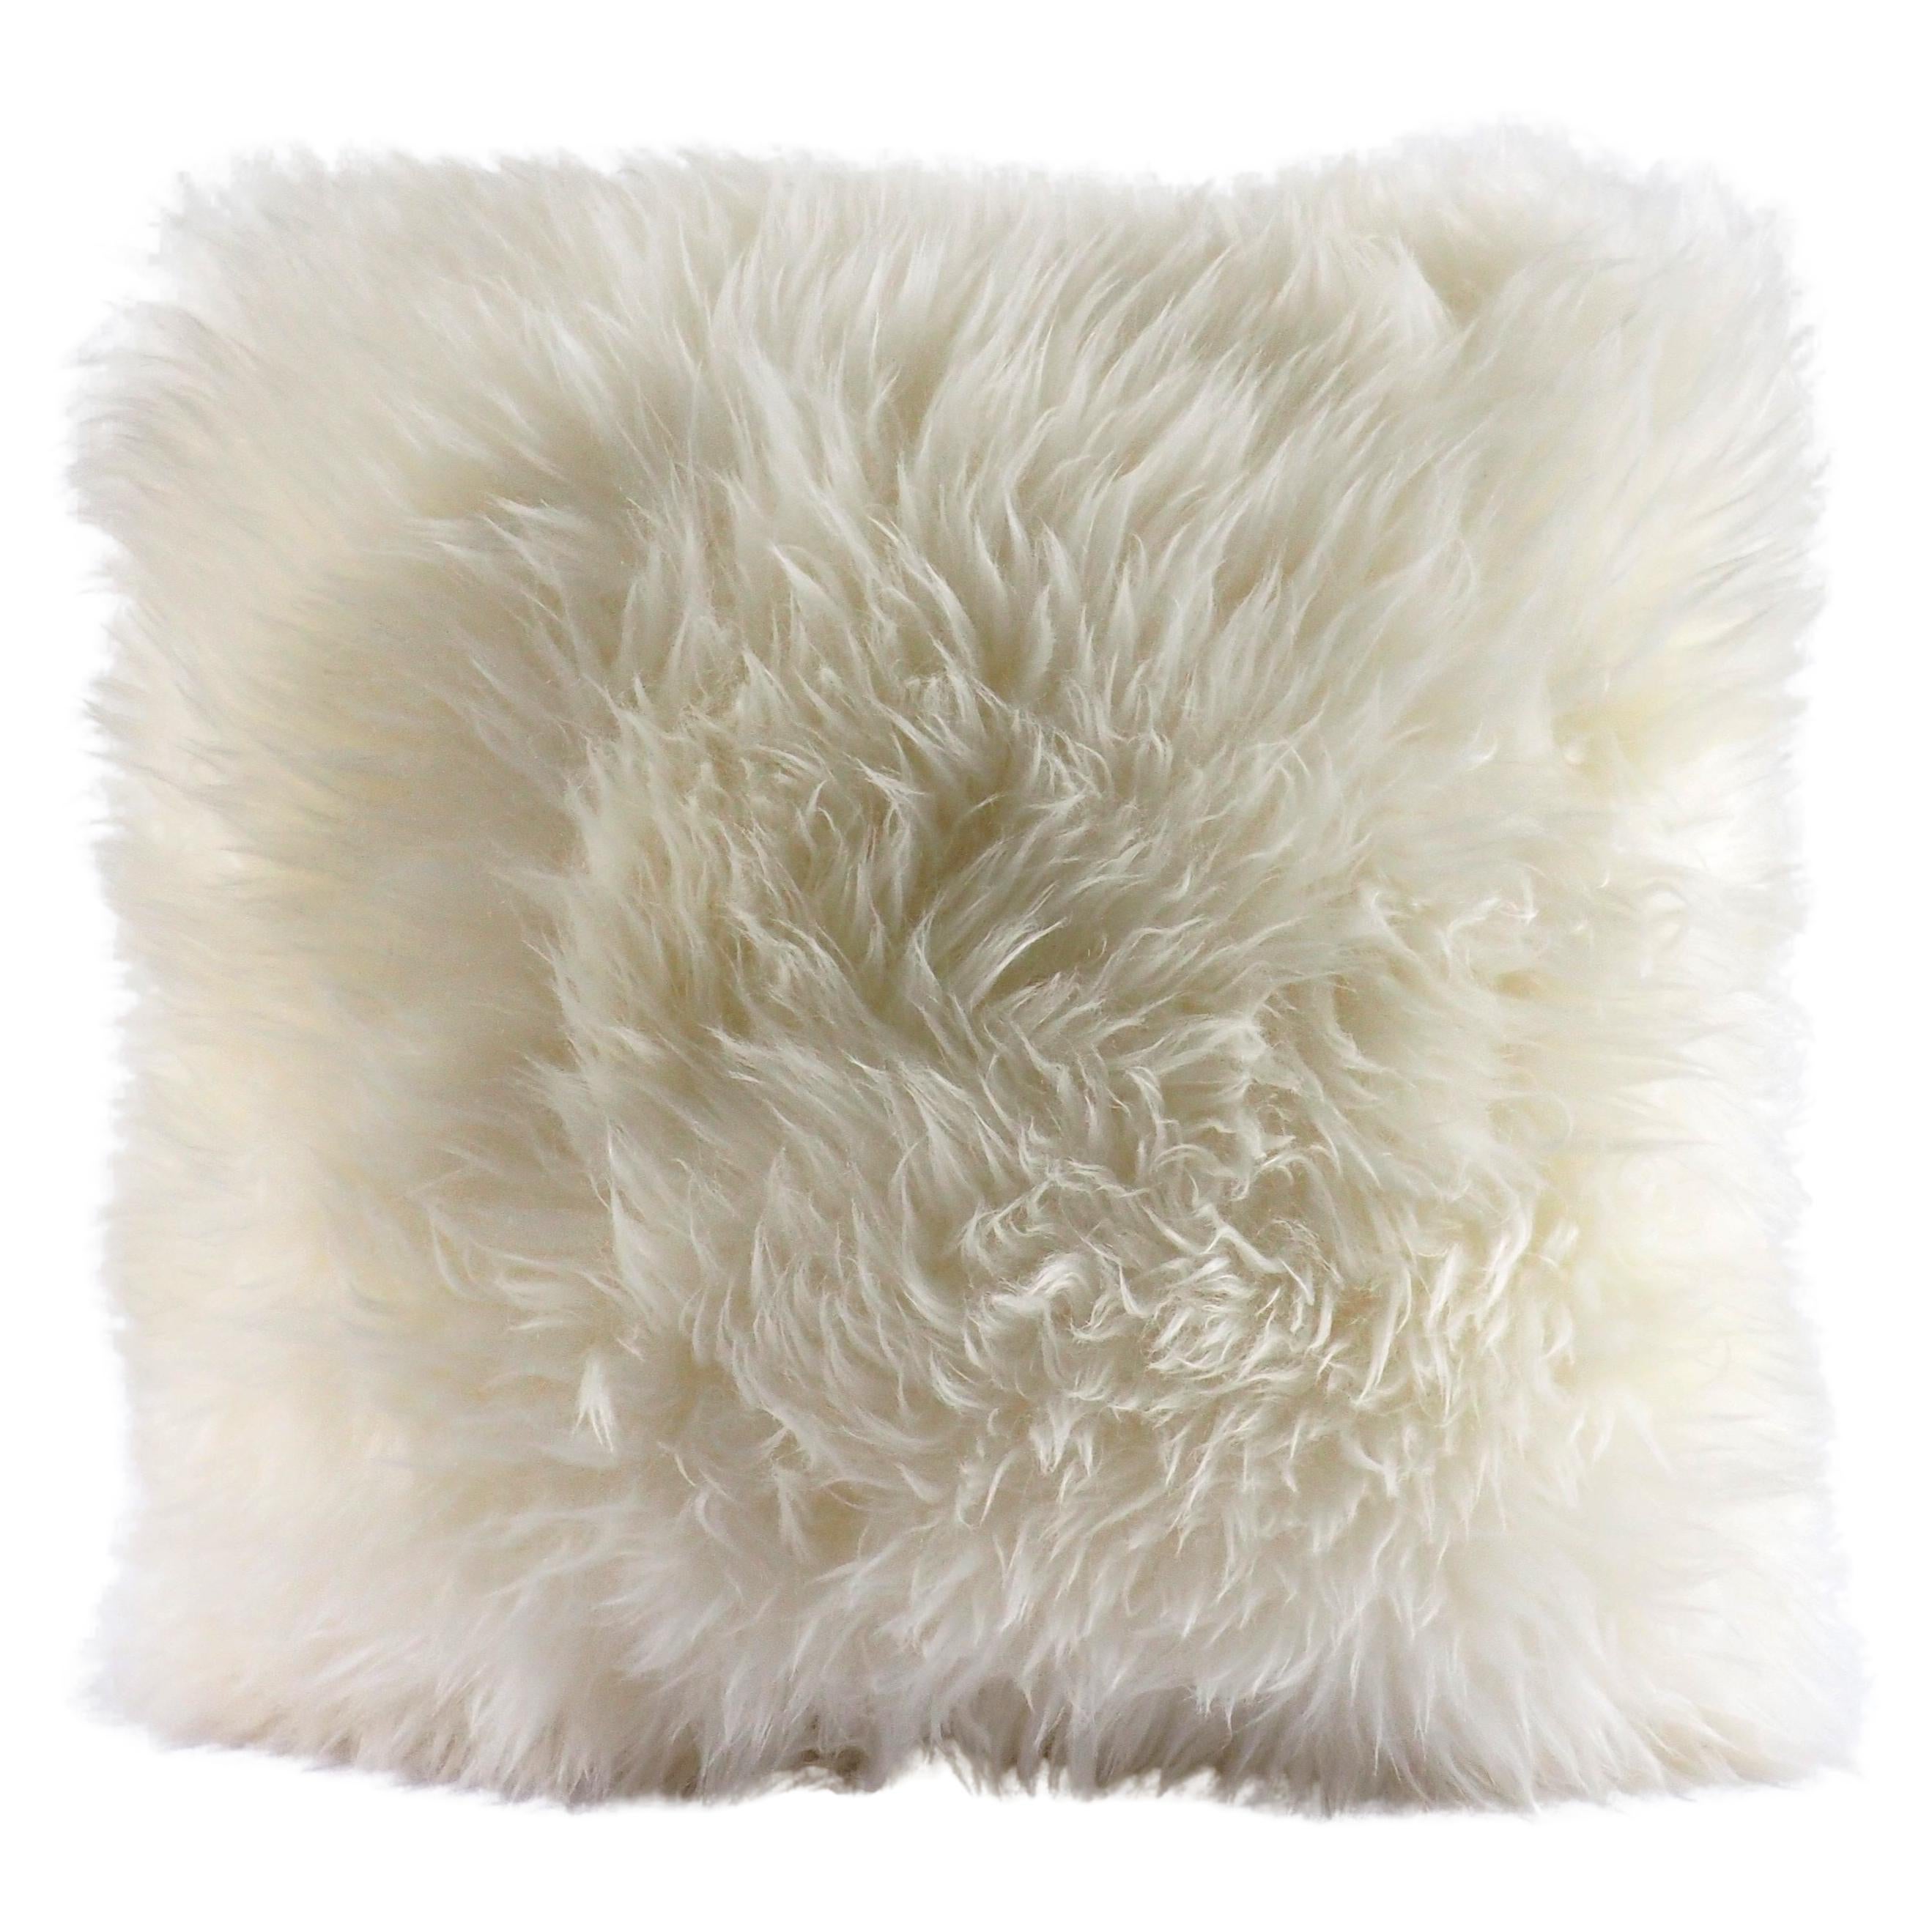 Milky Way Wool White Shearling Sheepskin Pillow Fluffy Cushion by Muchi Decor For Sale